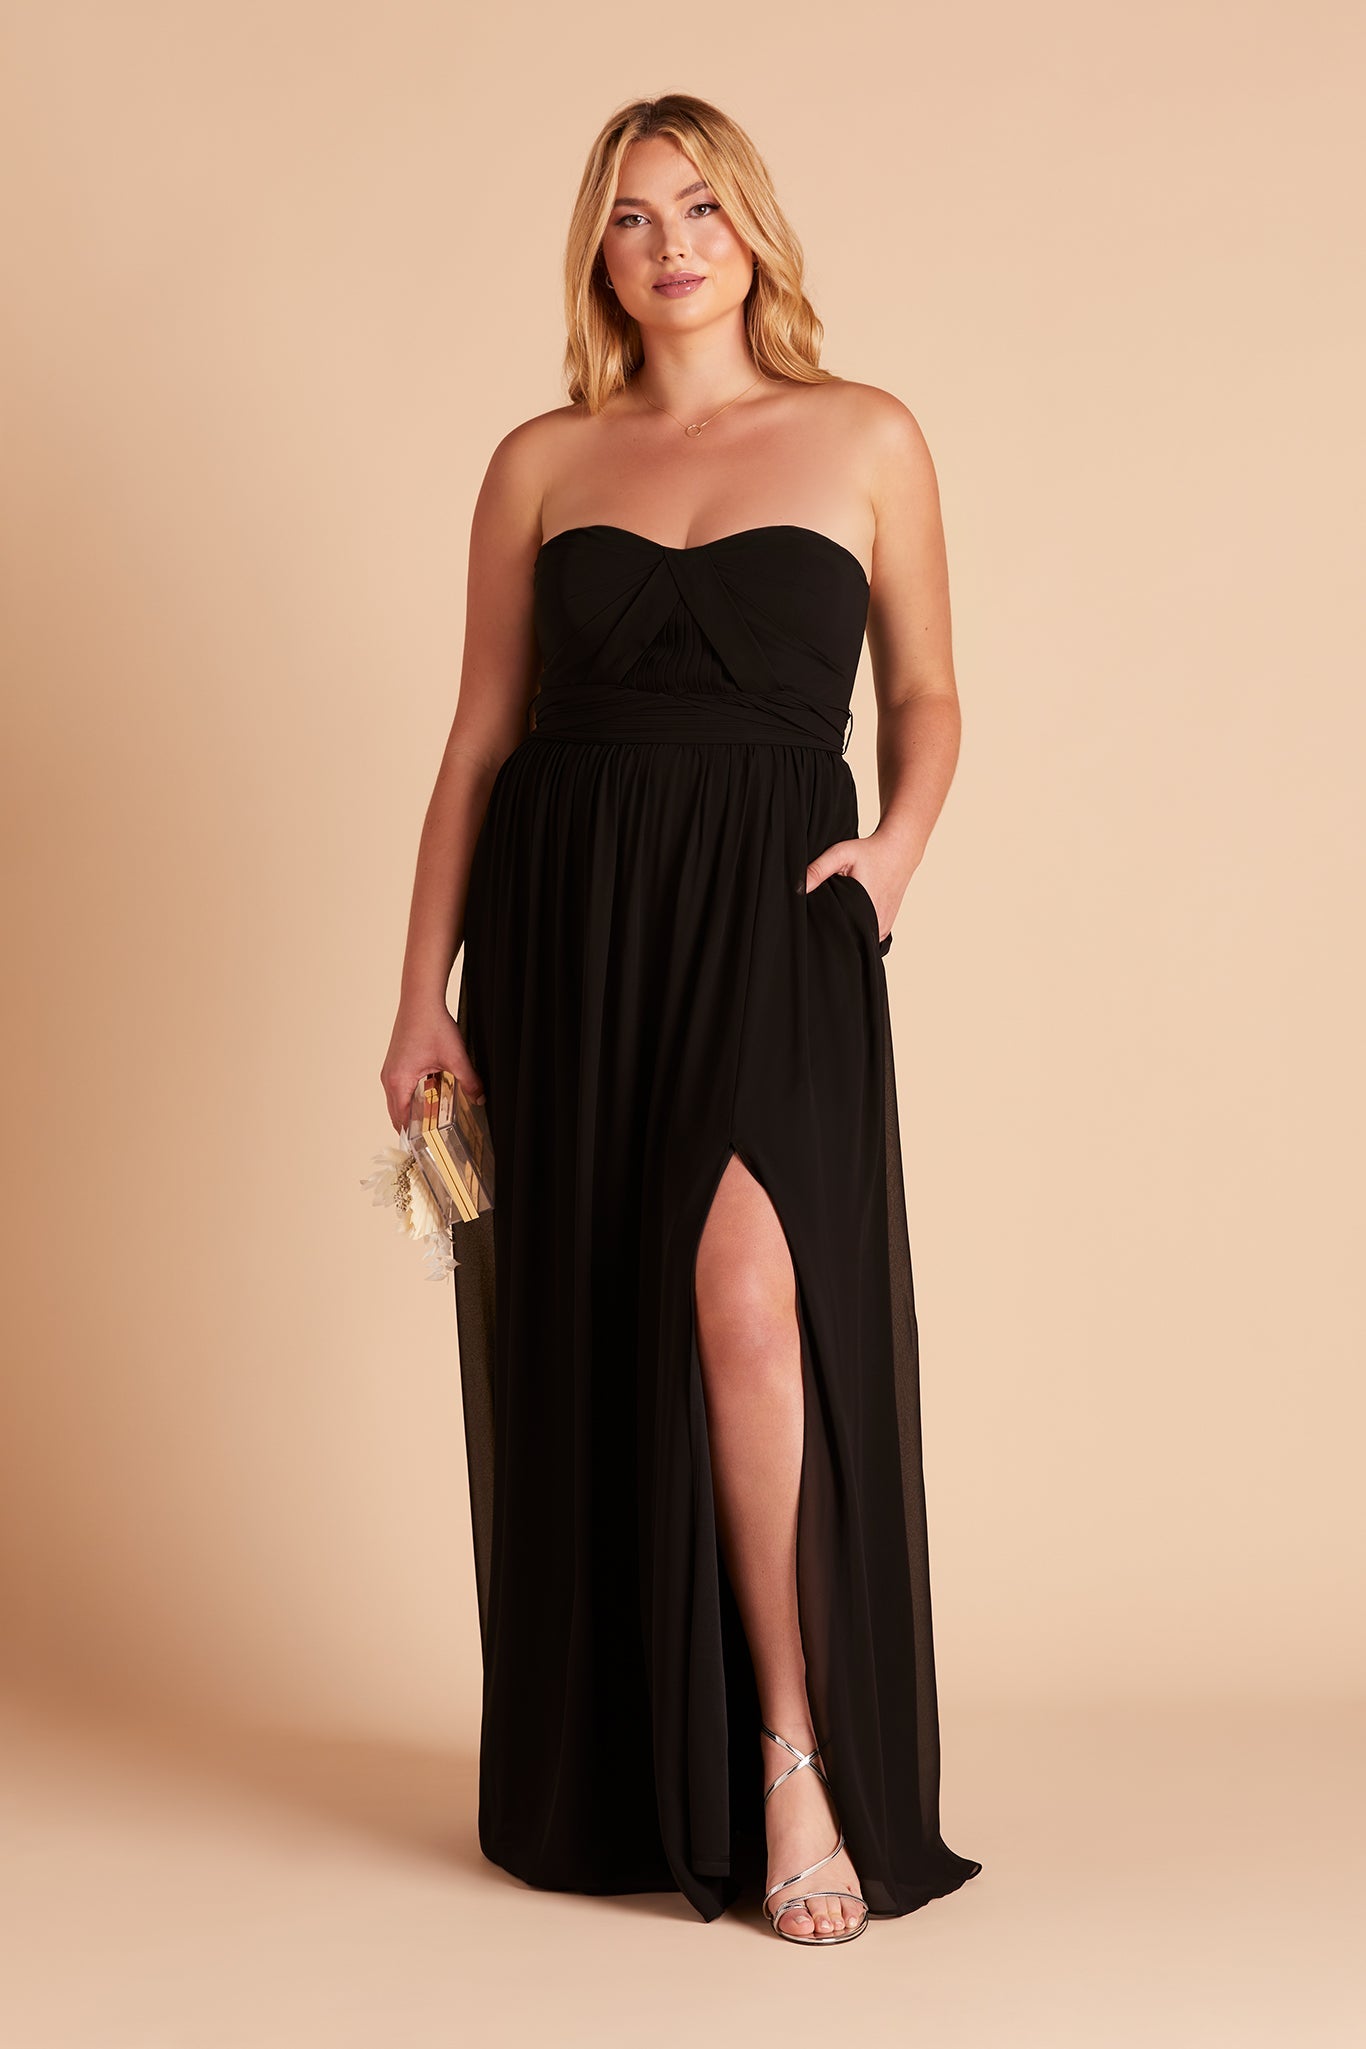 Women's Cocktail Dress, Fleur Strapless Dress - Black